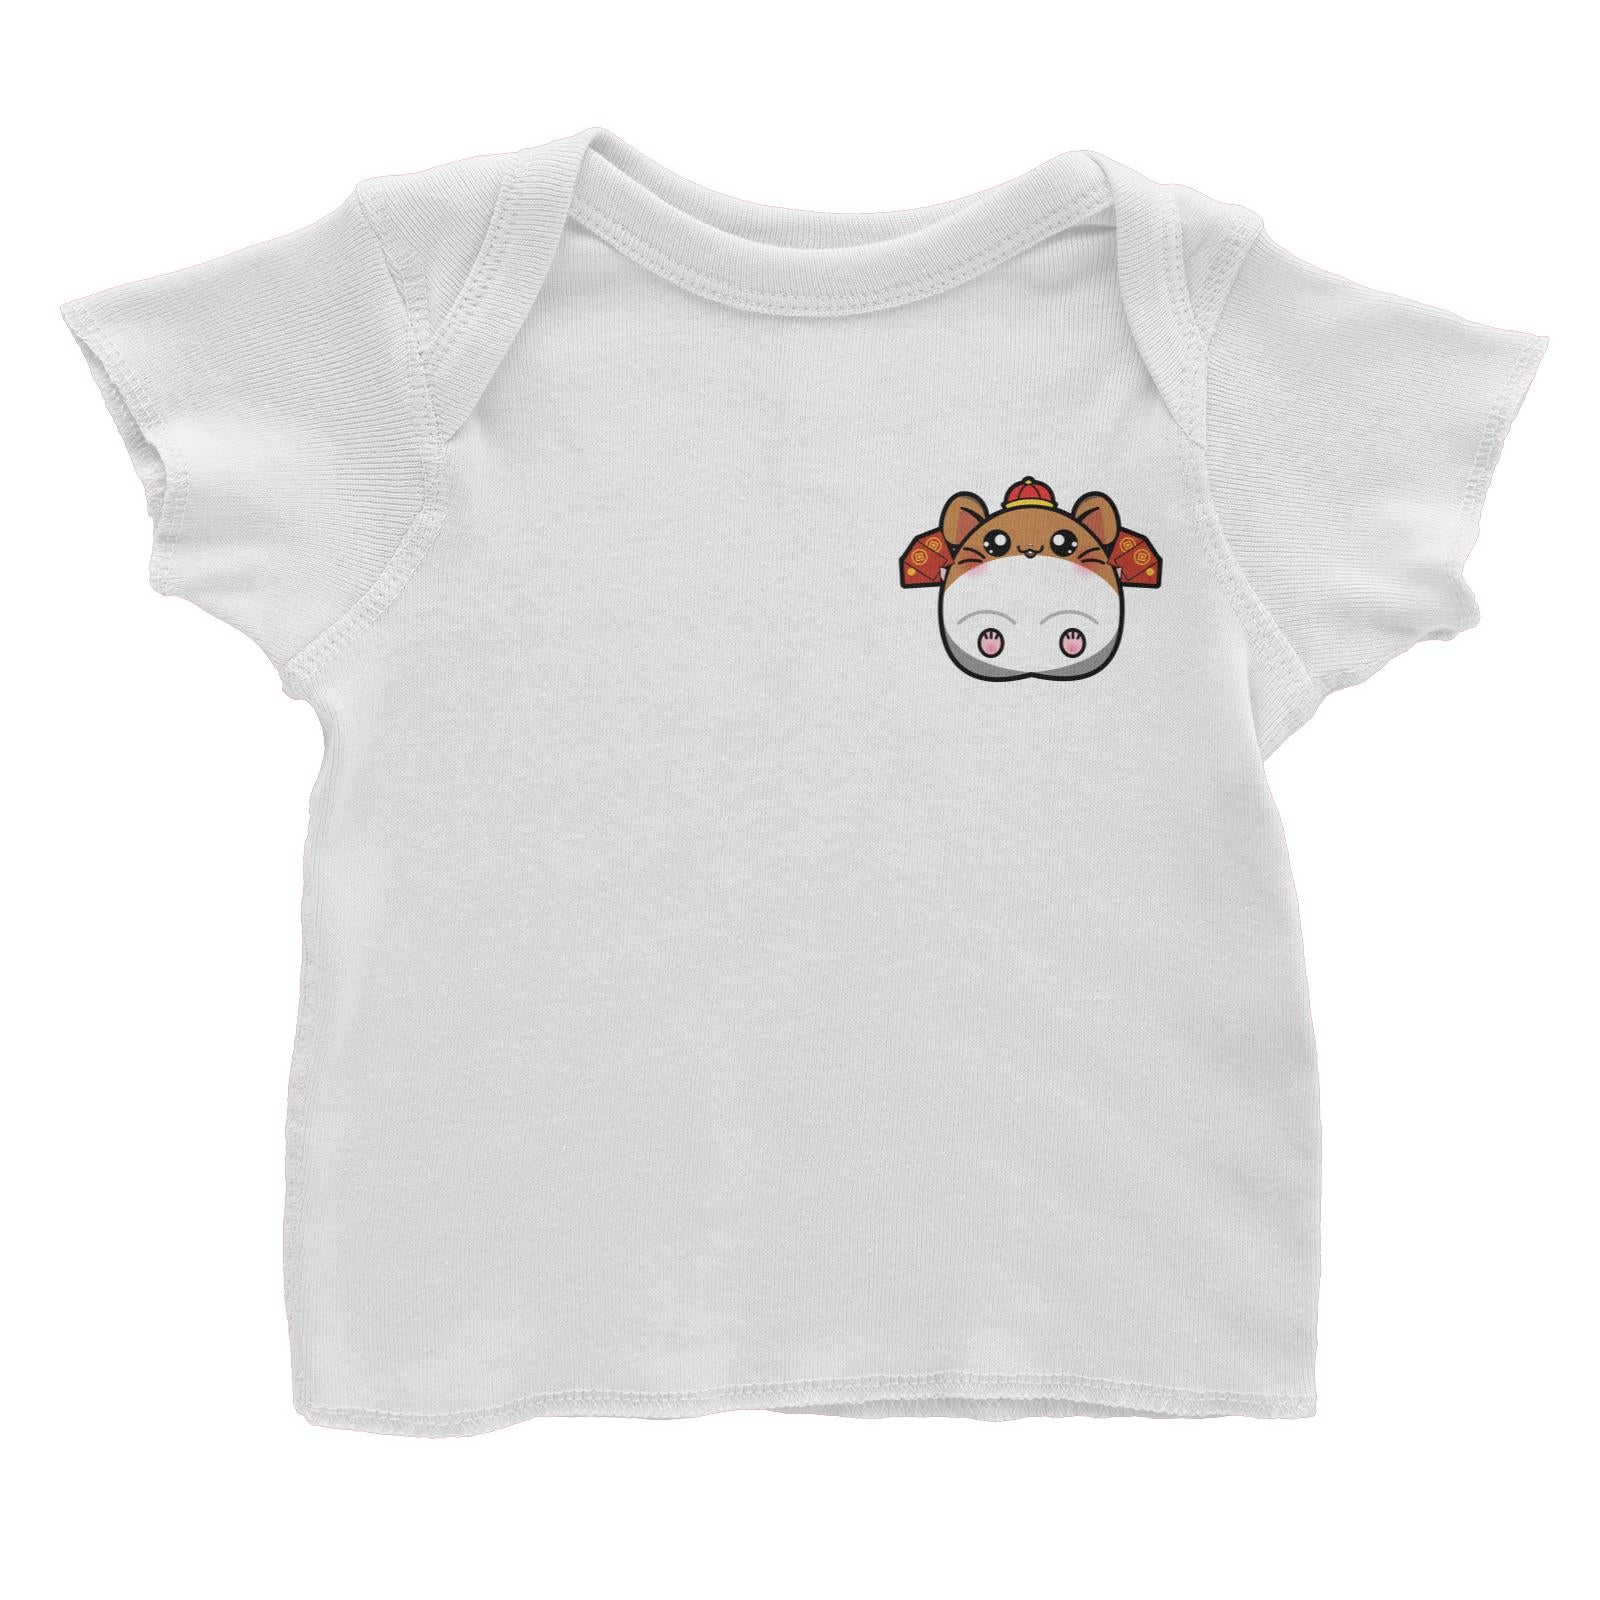 Prosperous Pocket Mouse Series Bob With AngPao Wishes Happy Prosperity Baby T-Shirt